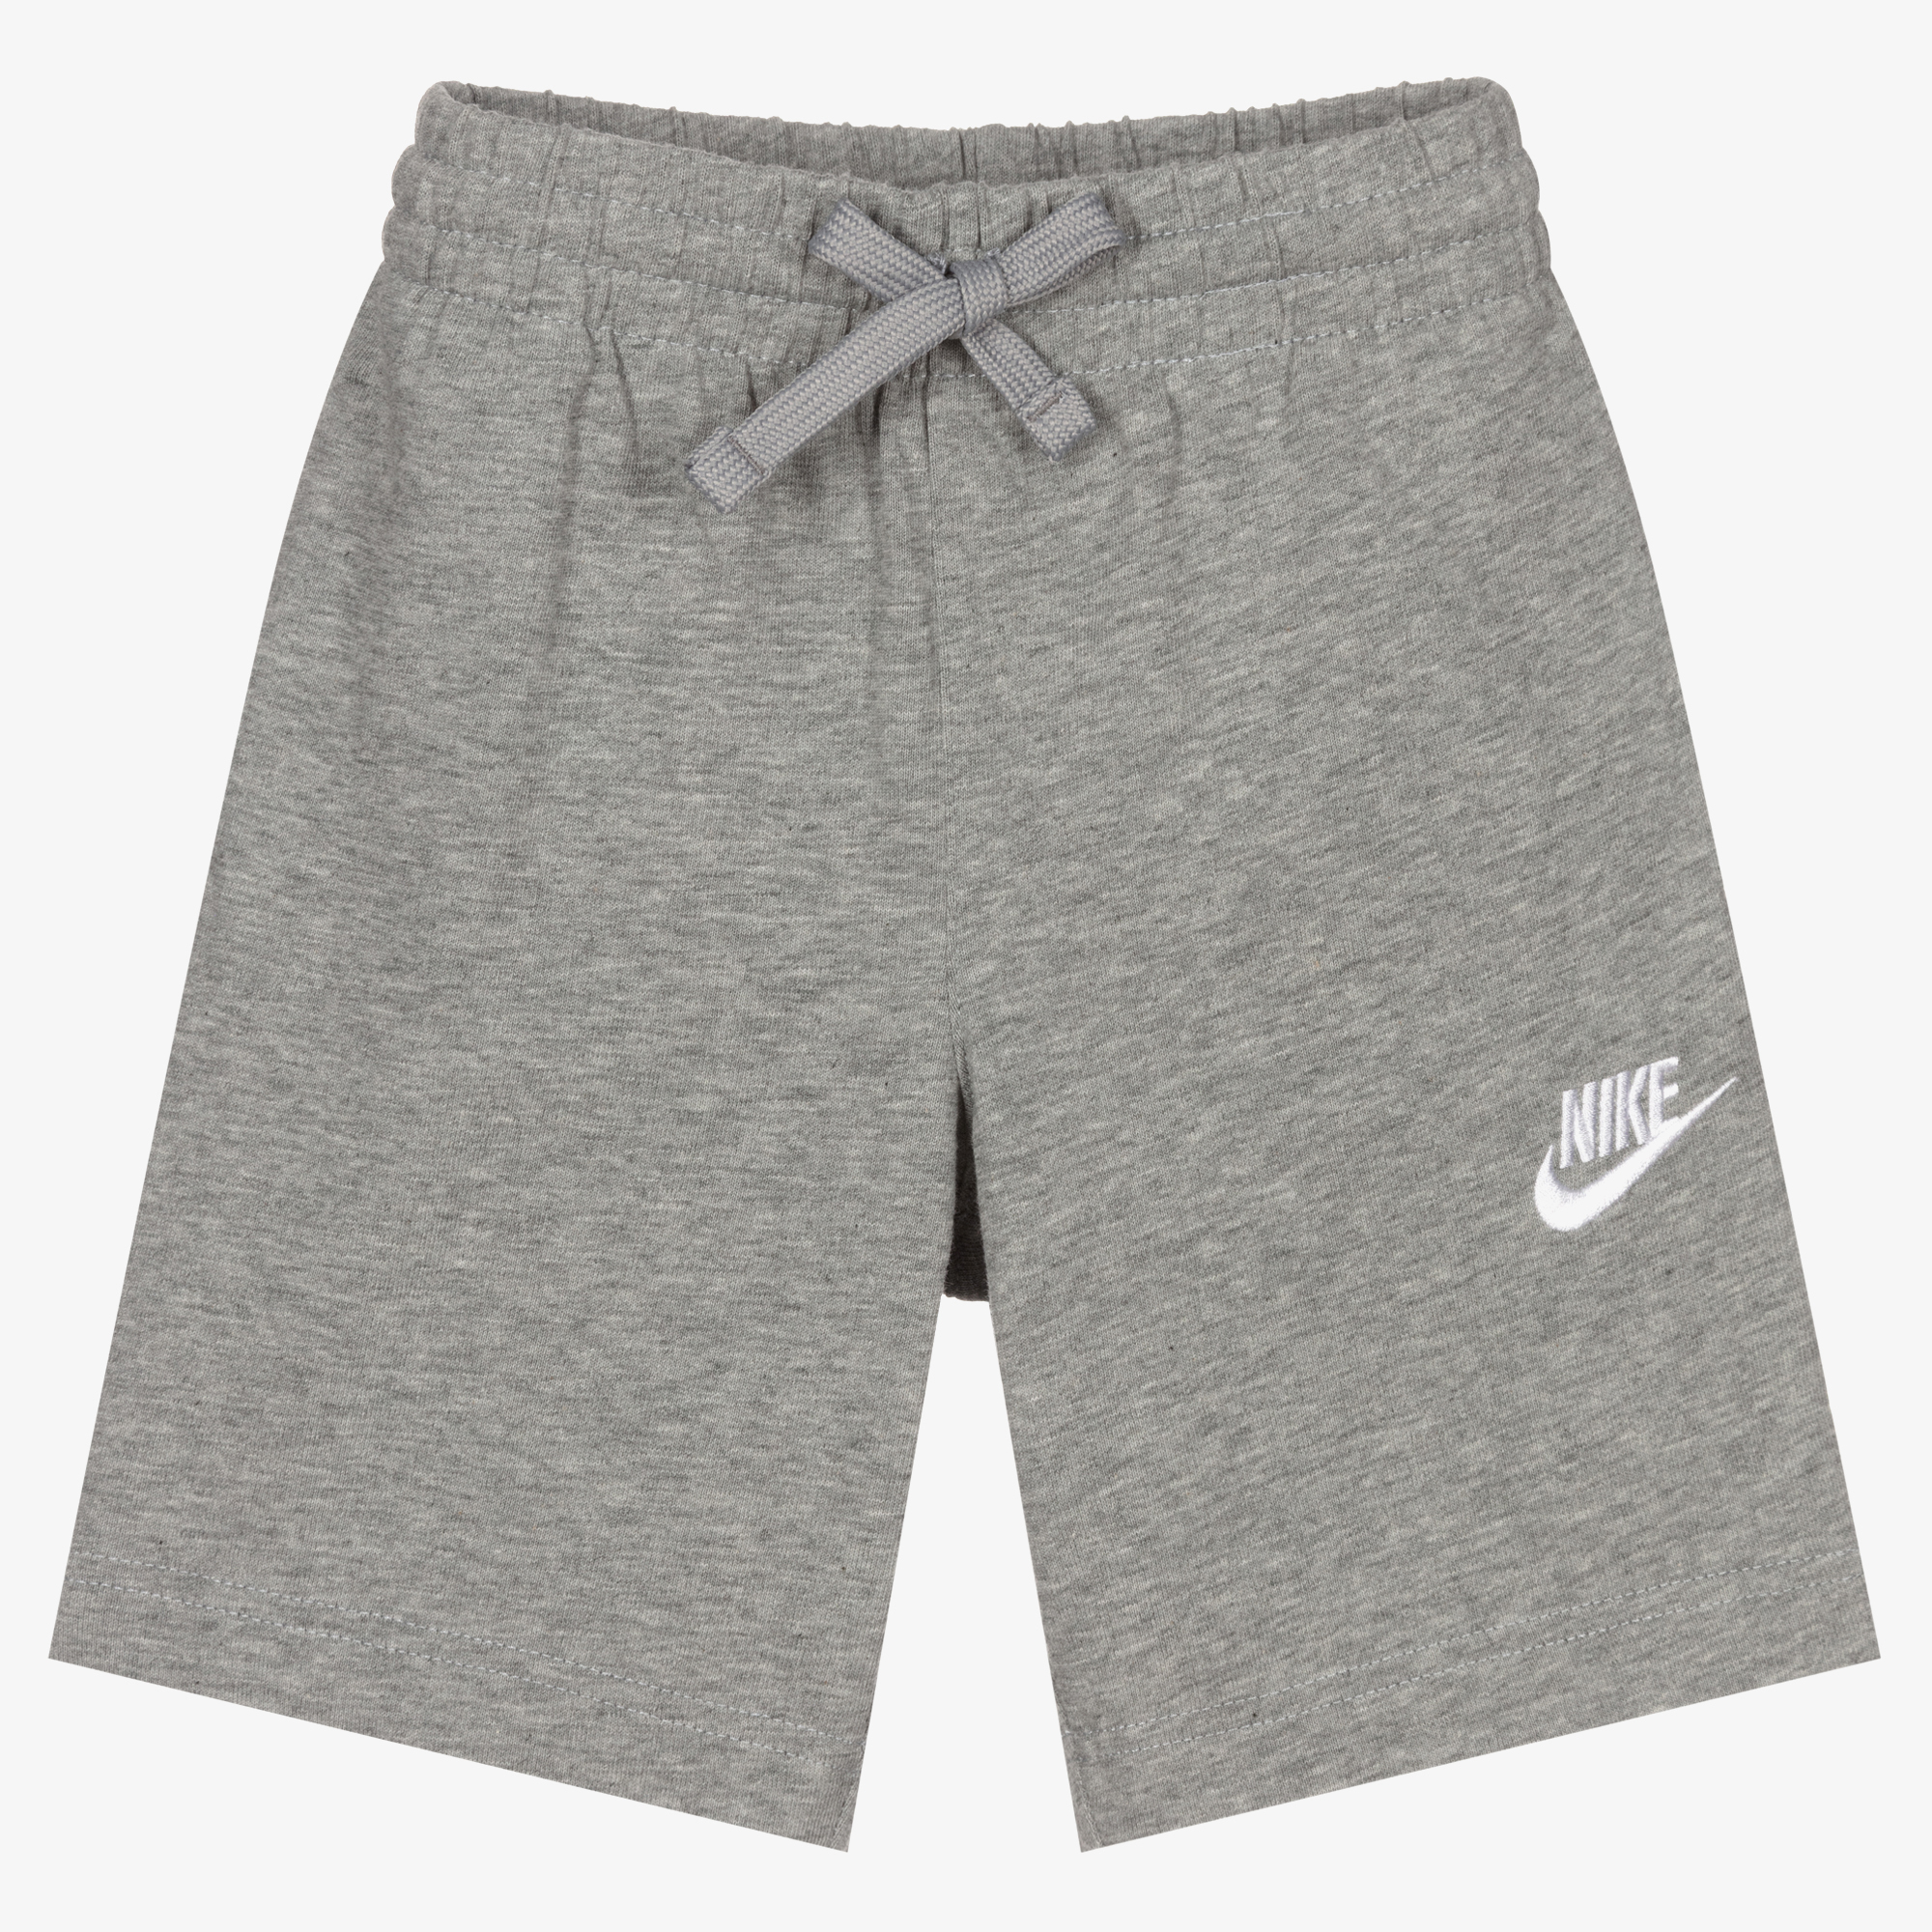 Nike - Boys Grey Logo Shorts